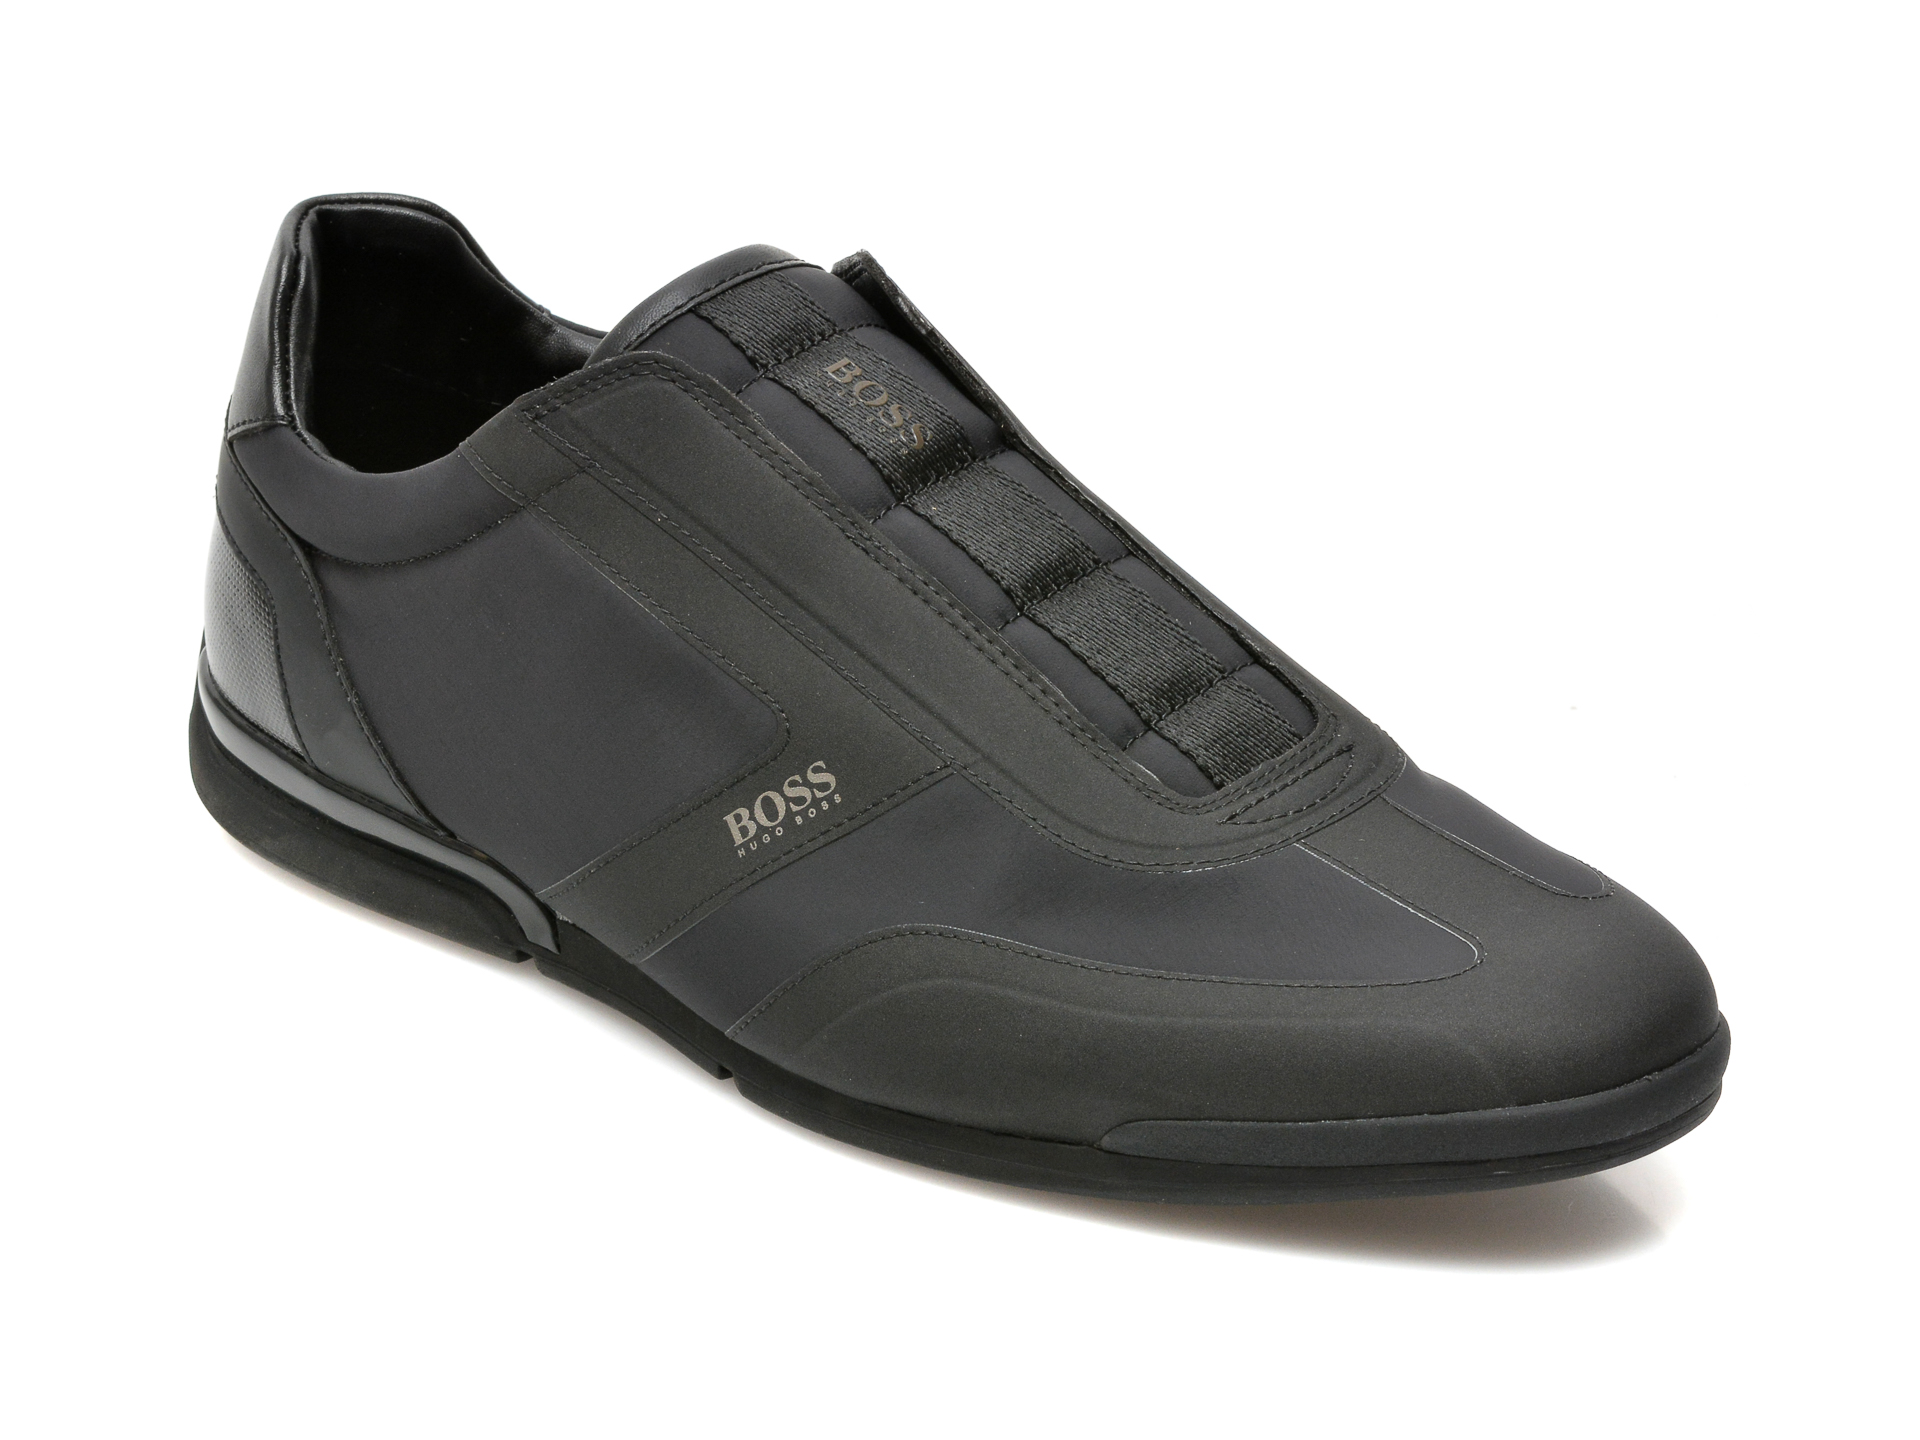 Pantofi HUGO BOSS negri, 9162, din material textil si piele ecologica Hugo Boss